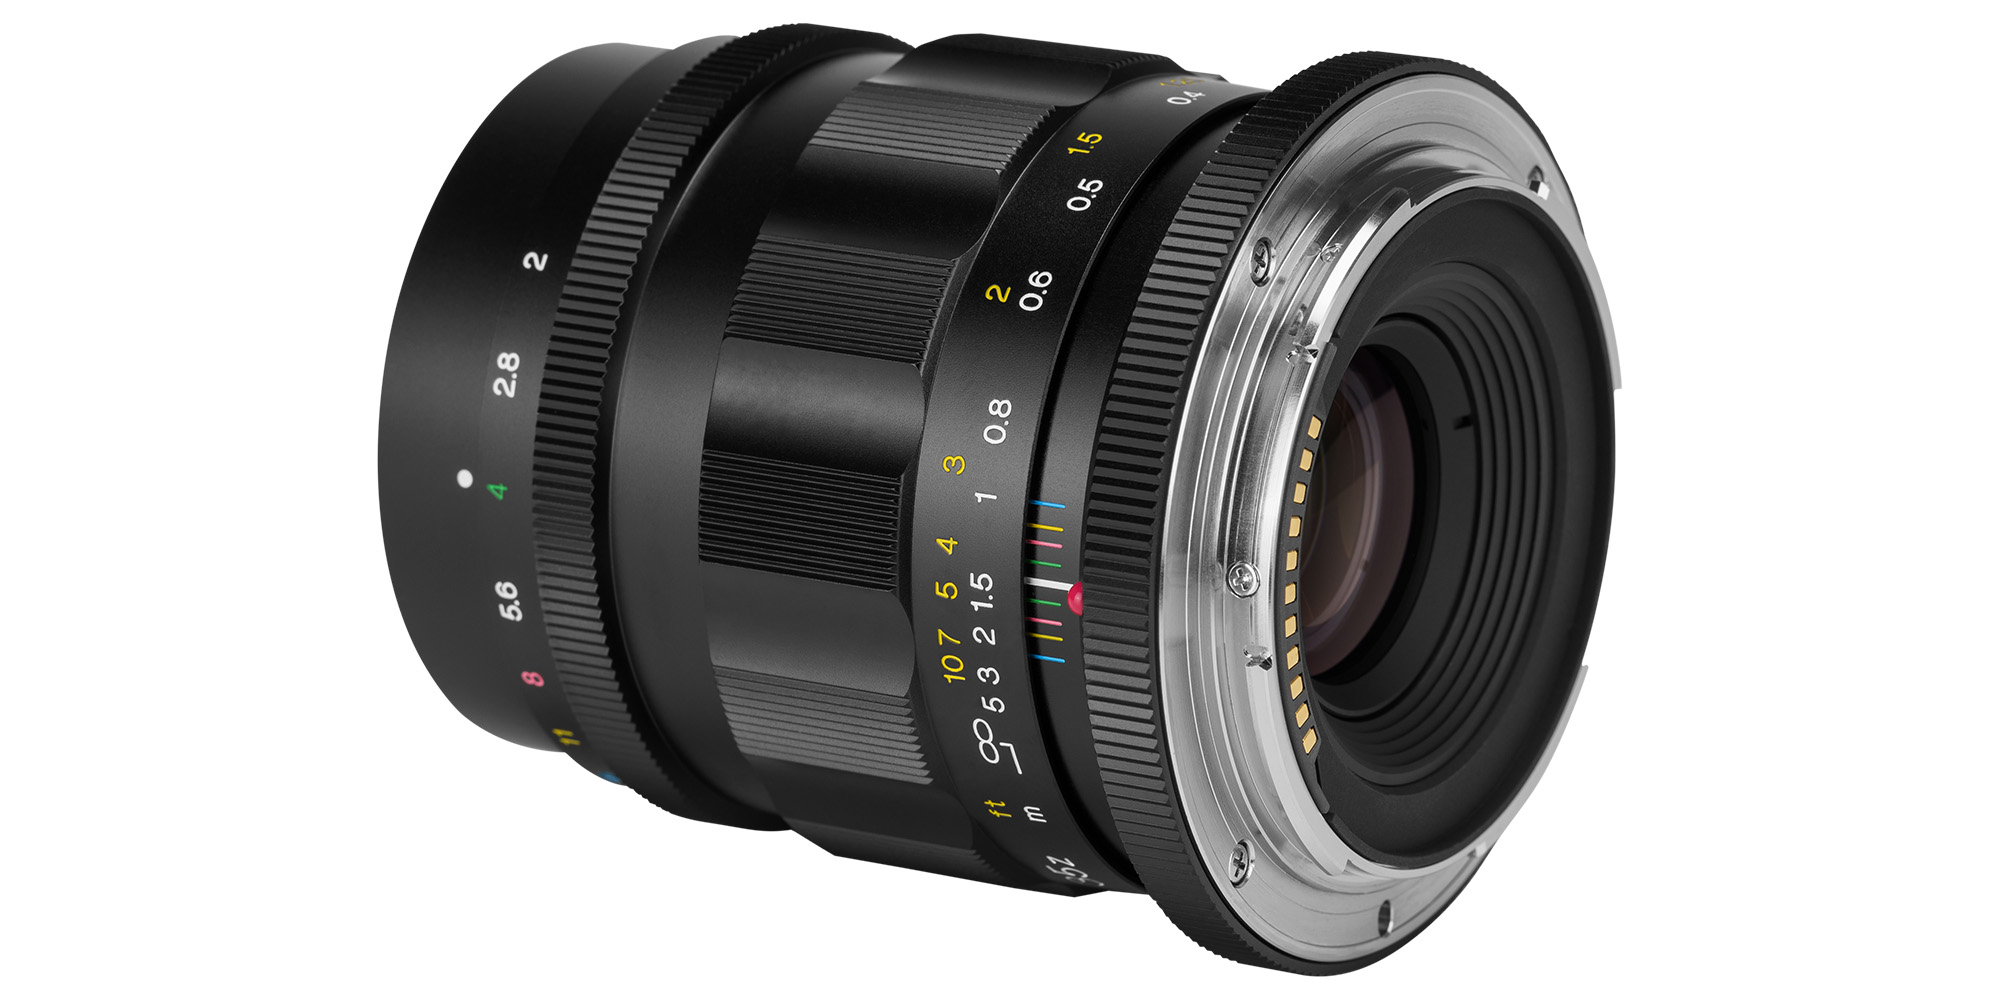 Voigtlander APO Lanthar 35mm f/2.0 lens for Nikon Z